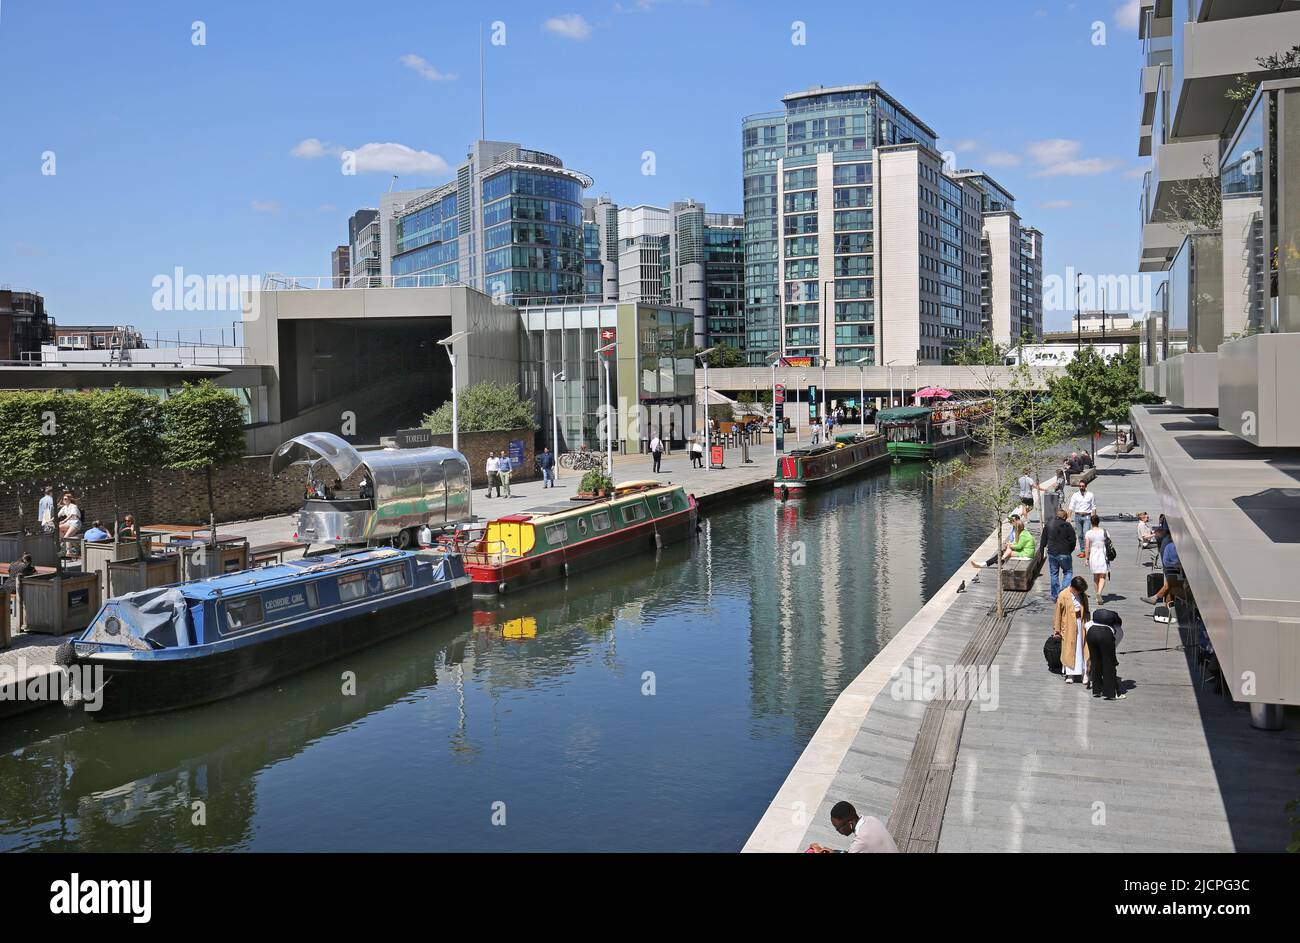 The new Merchant Square development on the Grand Union Canal Basin, Paddington, London, UK Stock Photo